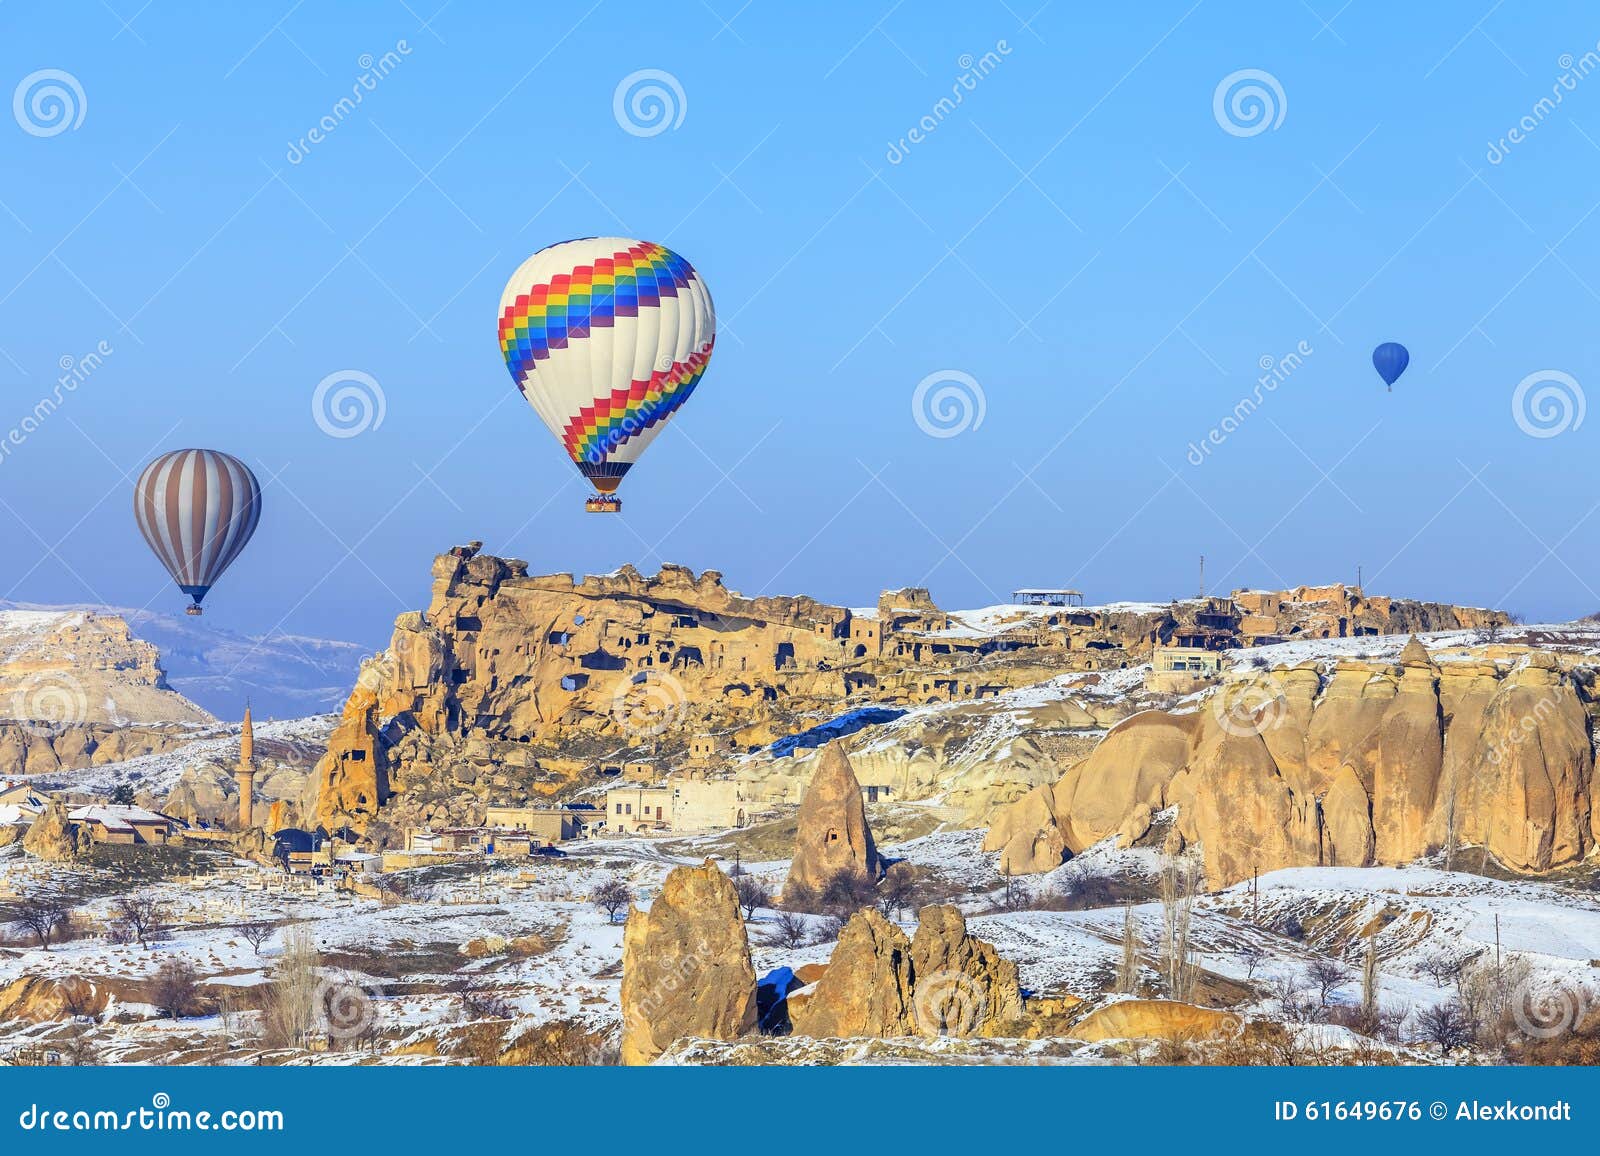 flying balloons over mountains at sunset. capadocia. turkey.